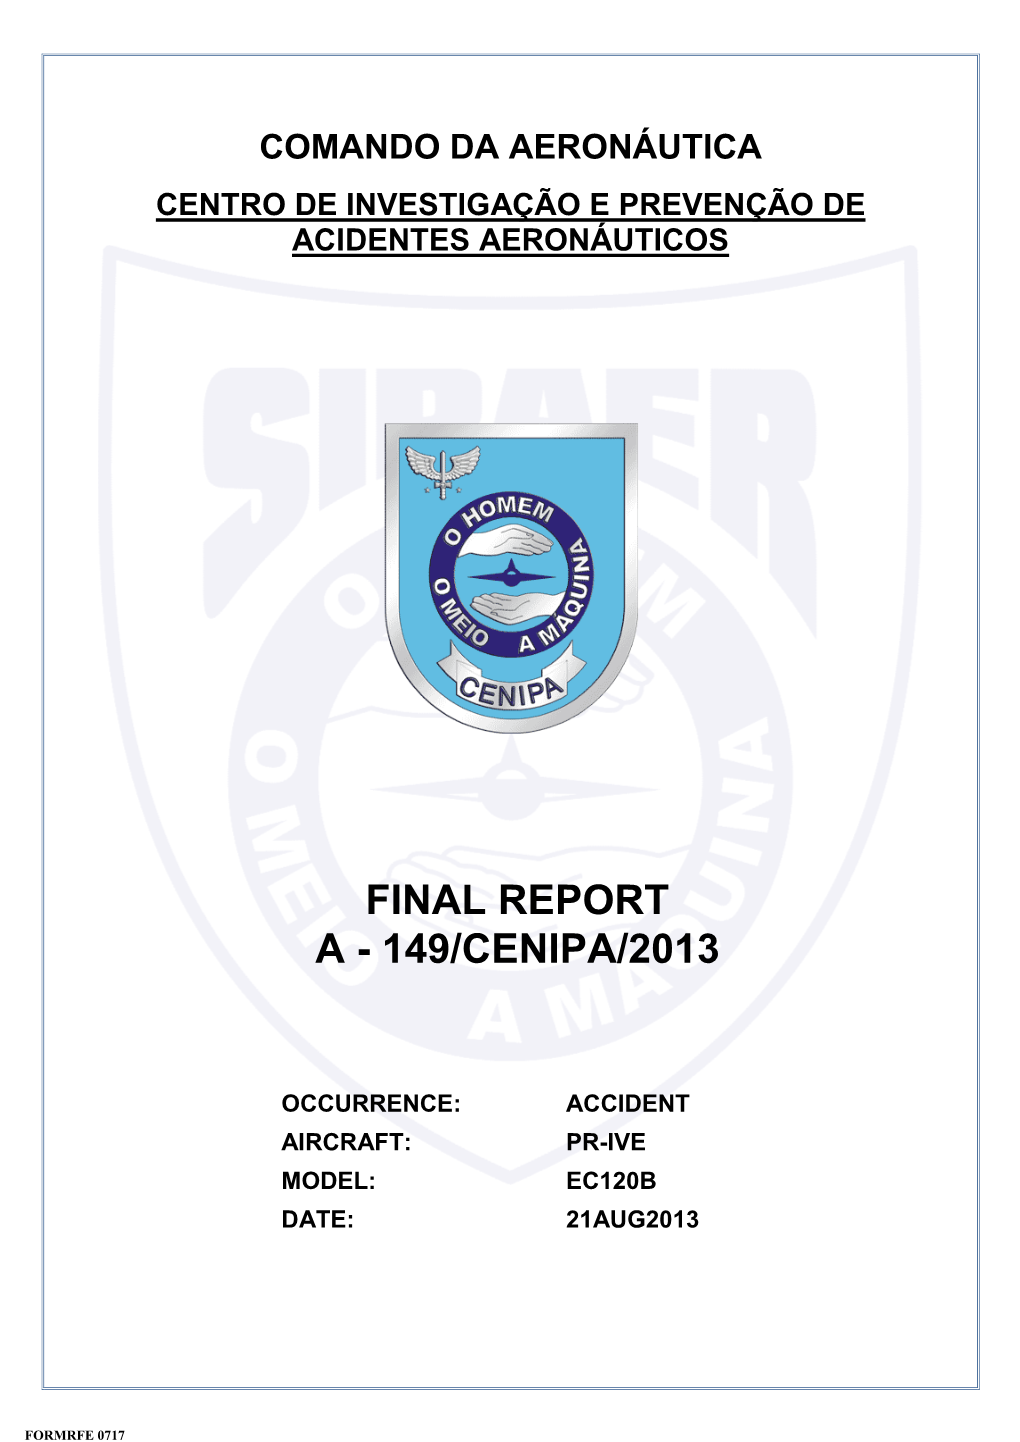 Final Report a - 149/Cenipa/2013